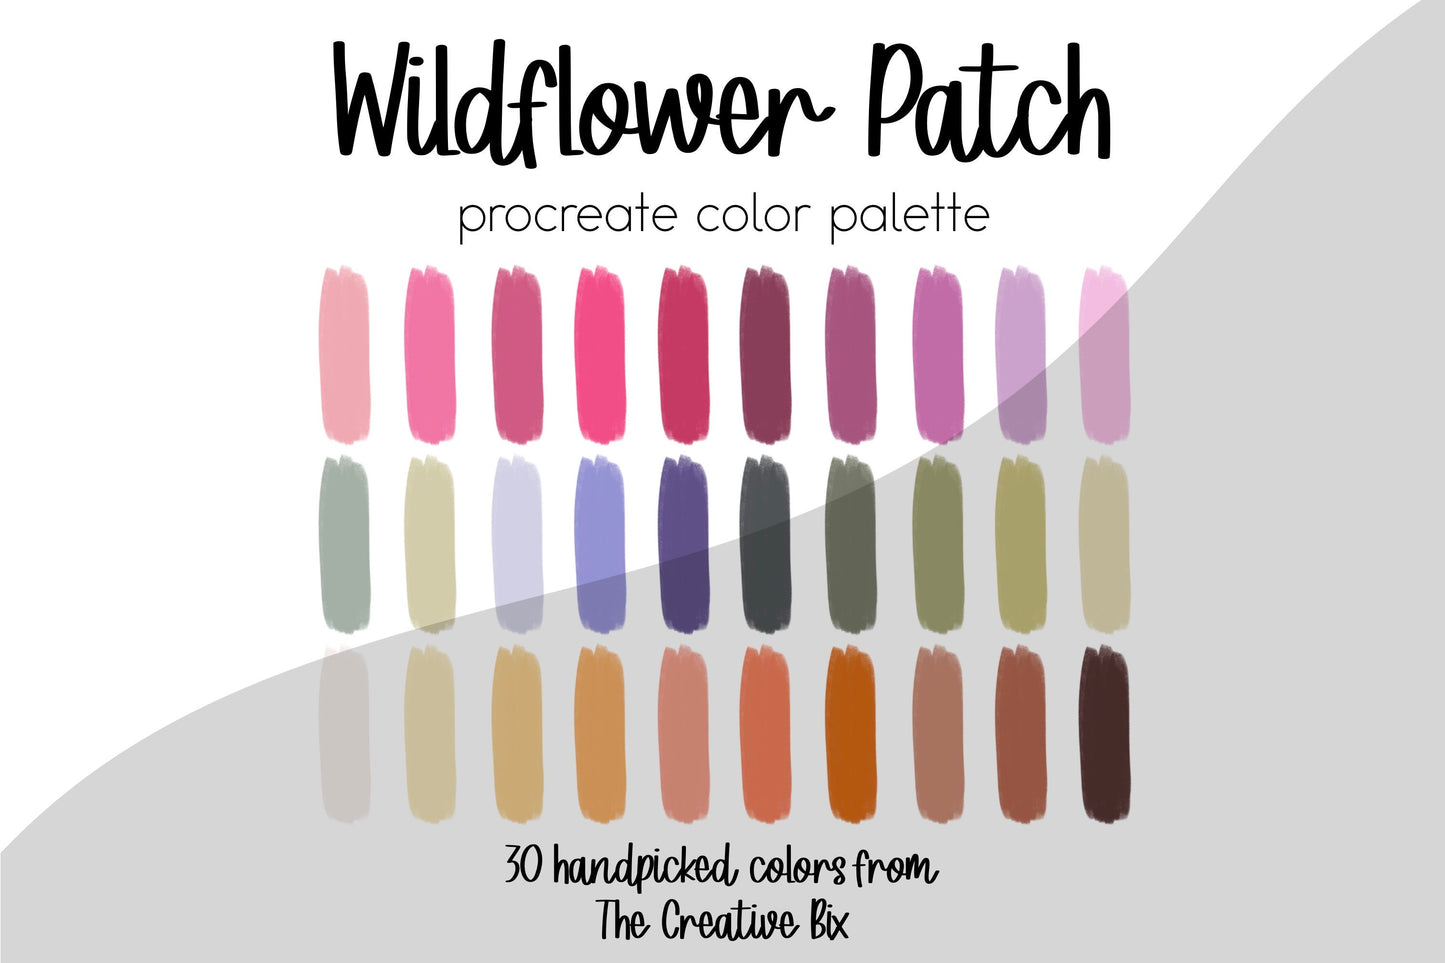 Wildflower Patch Procreate Palette